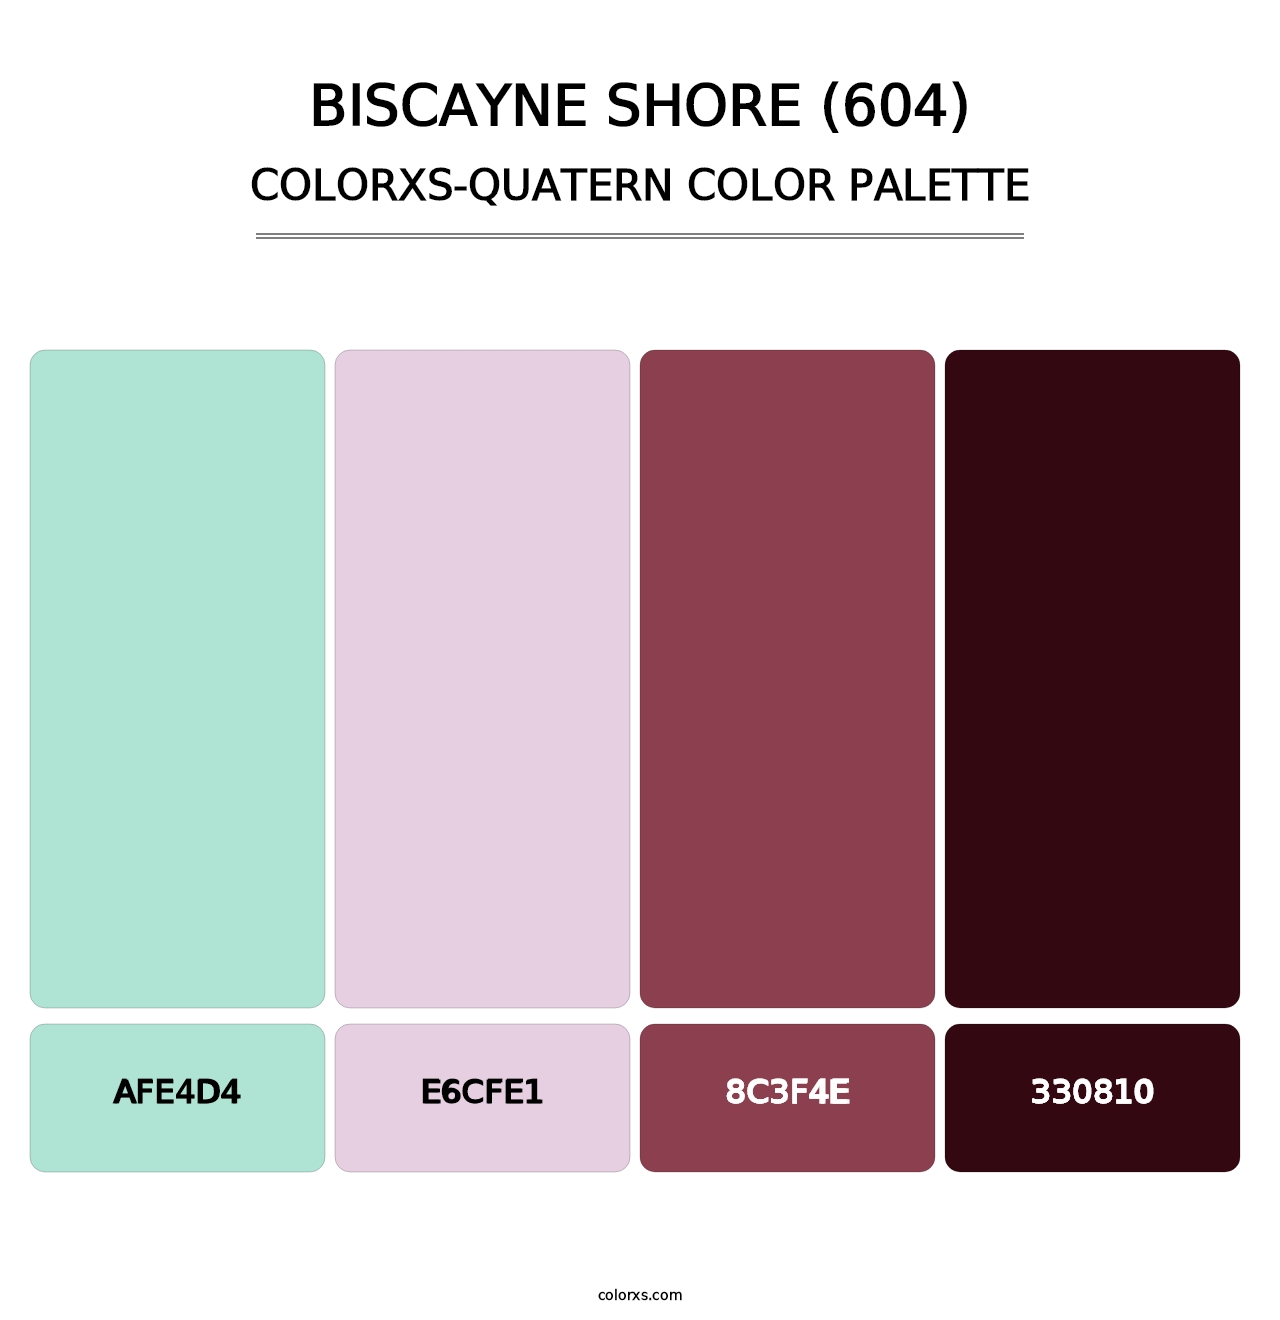 Biscayne Shore (604) - Colorxs Quatern Palette